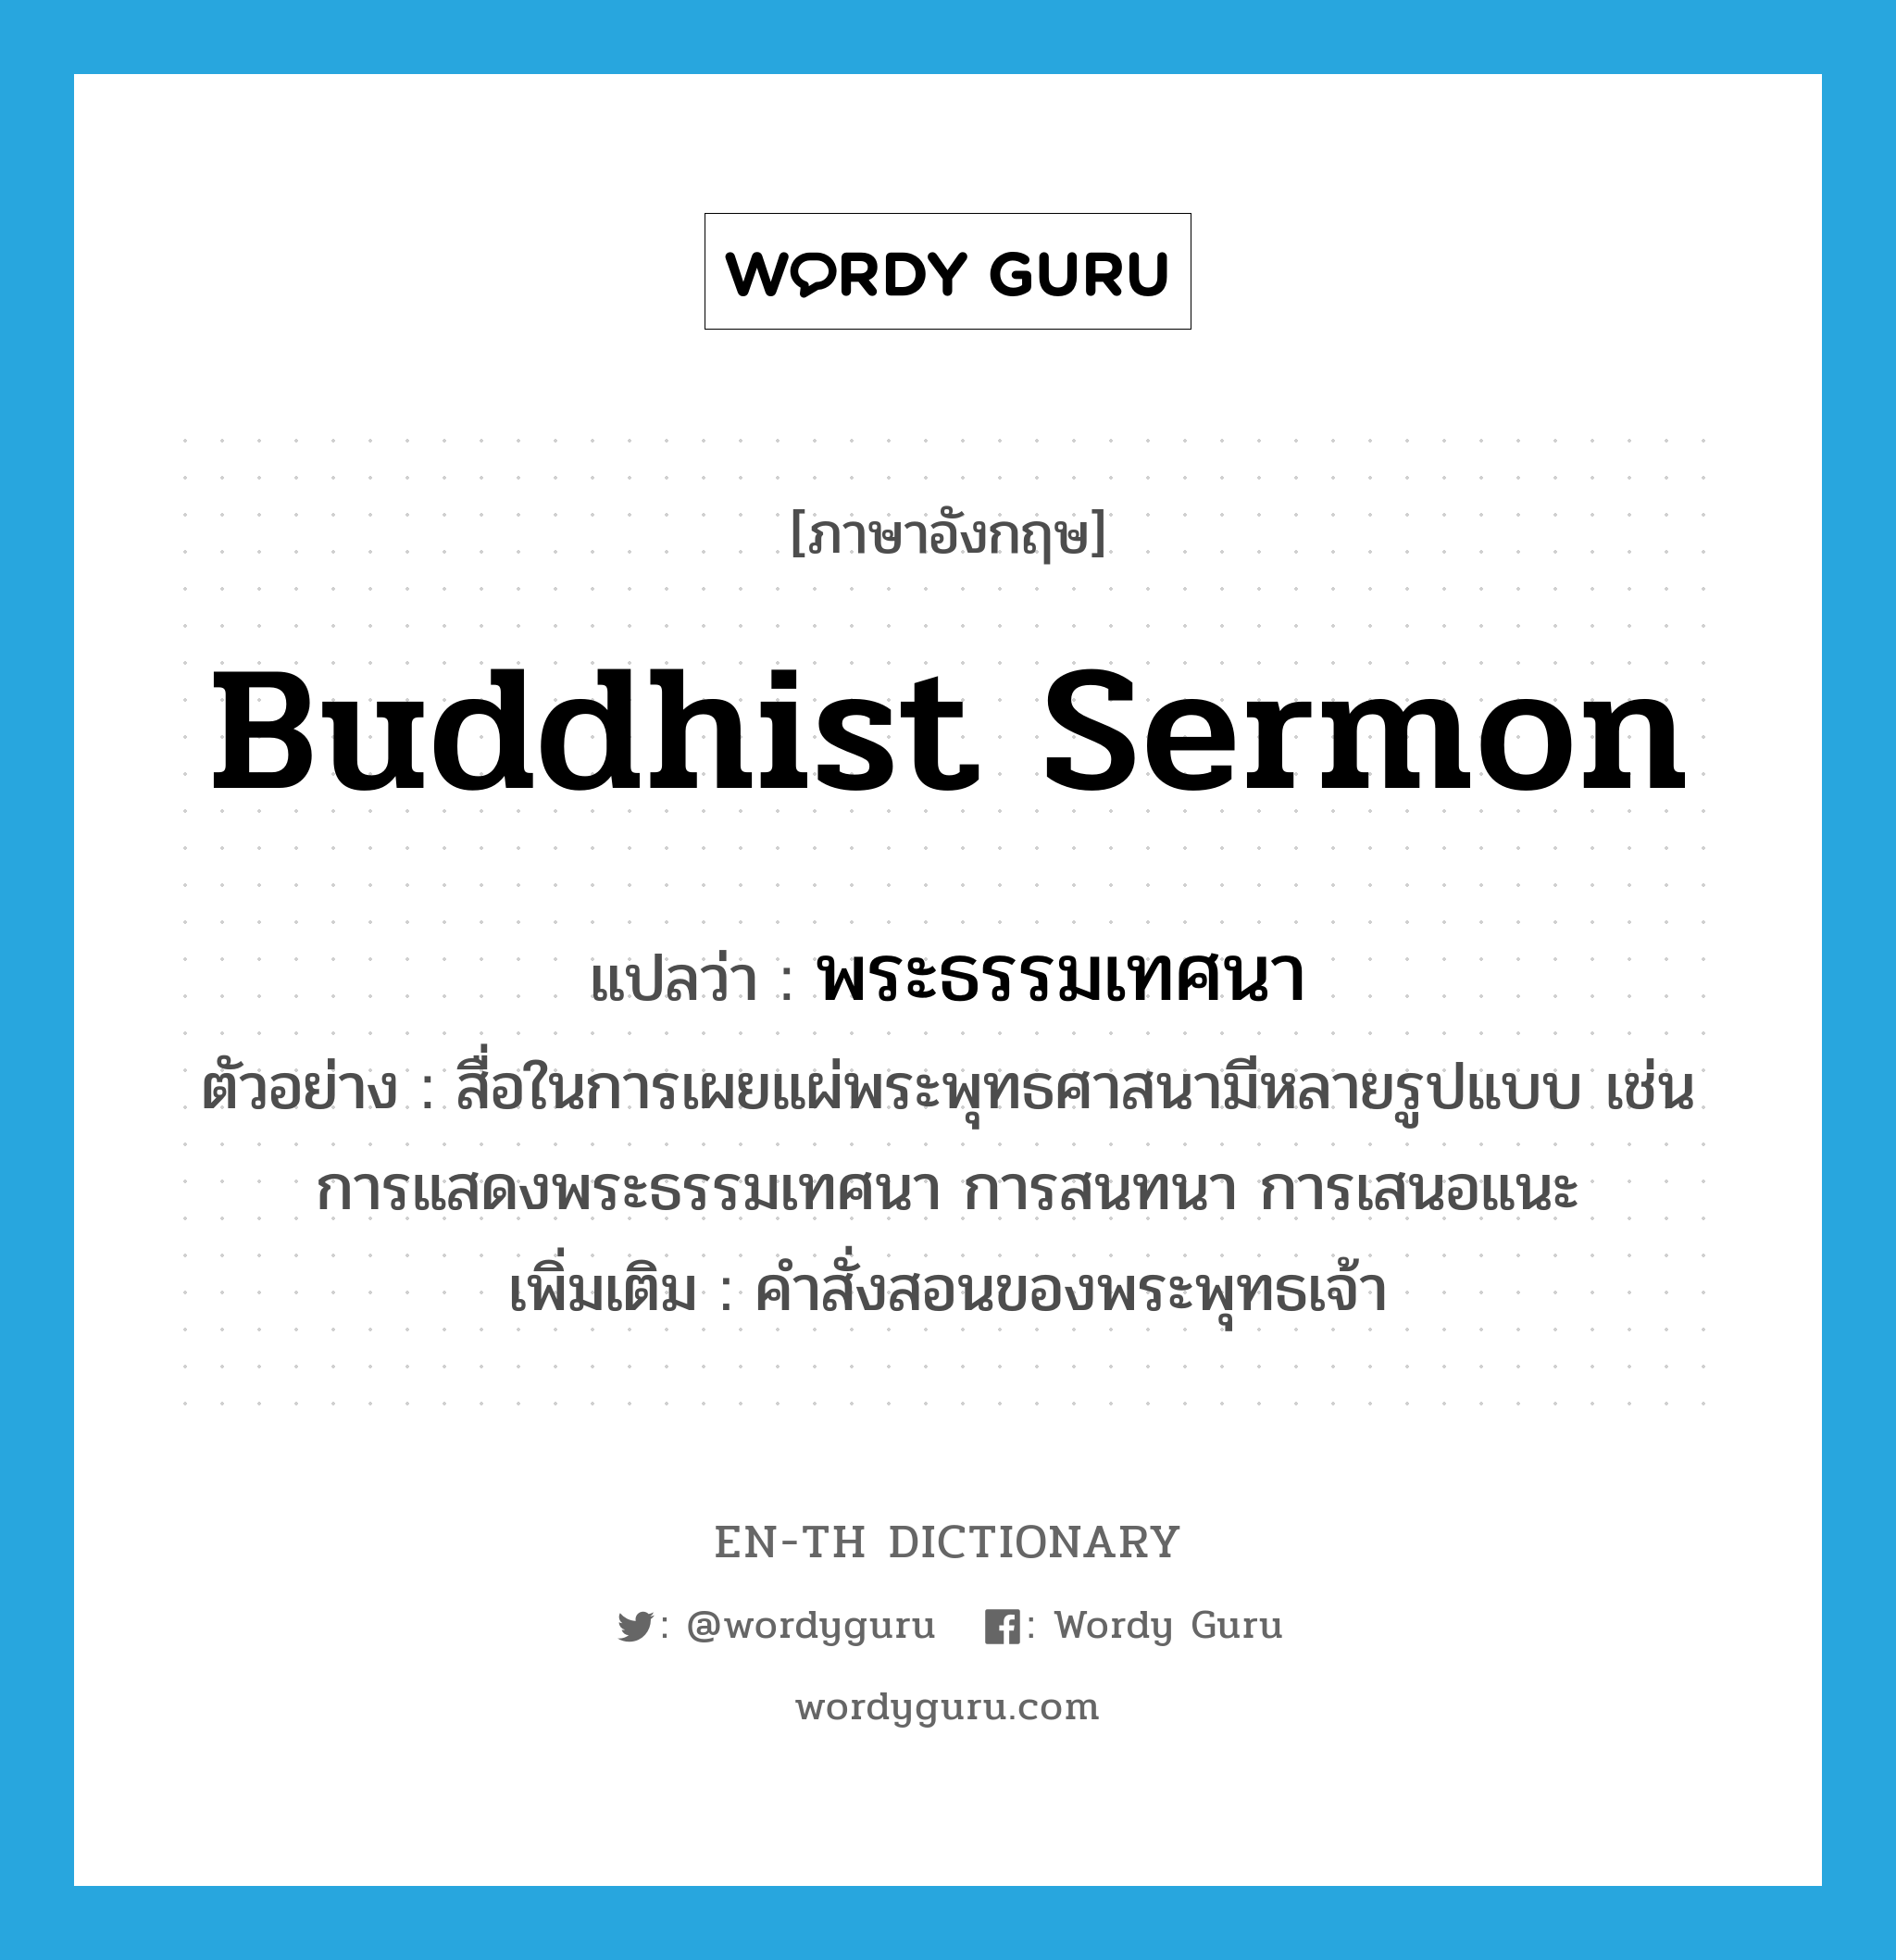 Buddhist sermon แปลว่า?, คำศัพท์ภาษาอังกฤษ Buddhist sermon แปลว่า พระธรรมเทศนา ประเภท N ตัวอย่าง สื่อในการเผยแผ่พระพุทธศาสนามีหลายรูปแบบ เช่น การแสดงพระธรรมเทศนา การสนทนา การเสนอแนะ เพิ่มเติม คำสั่งสอนของพระพุทธเจ้า หมวด N